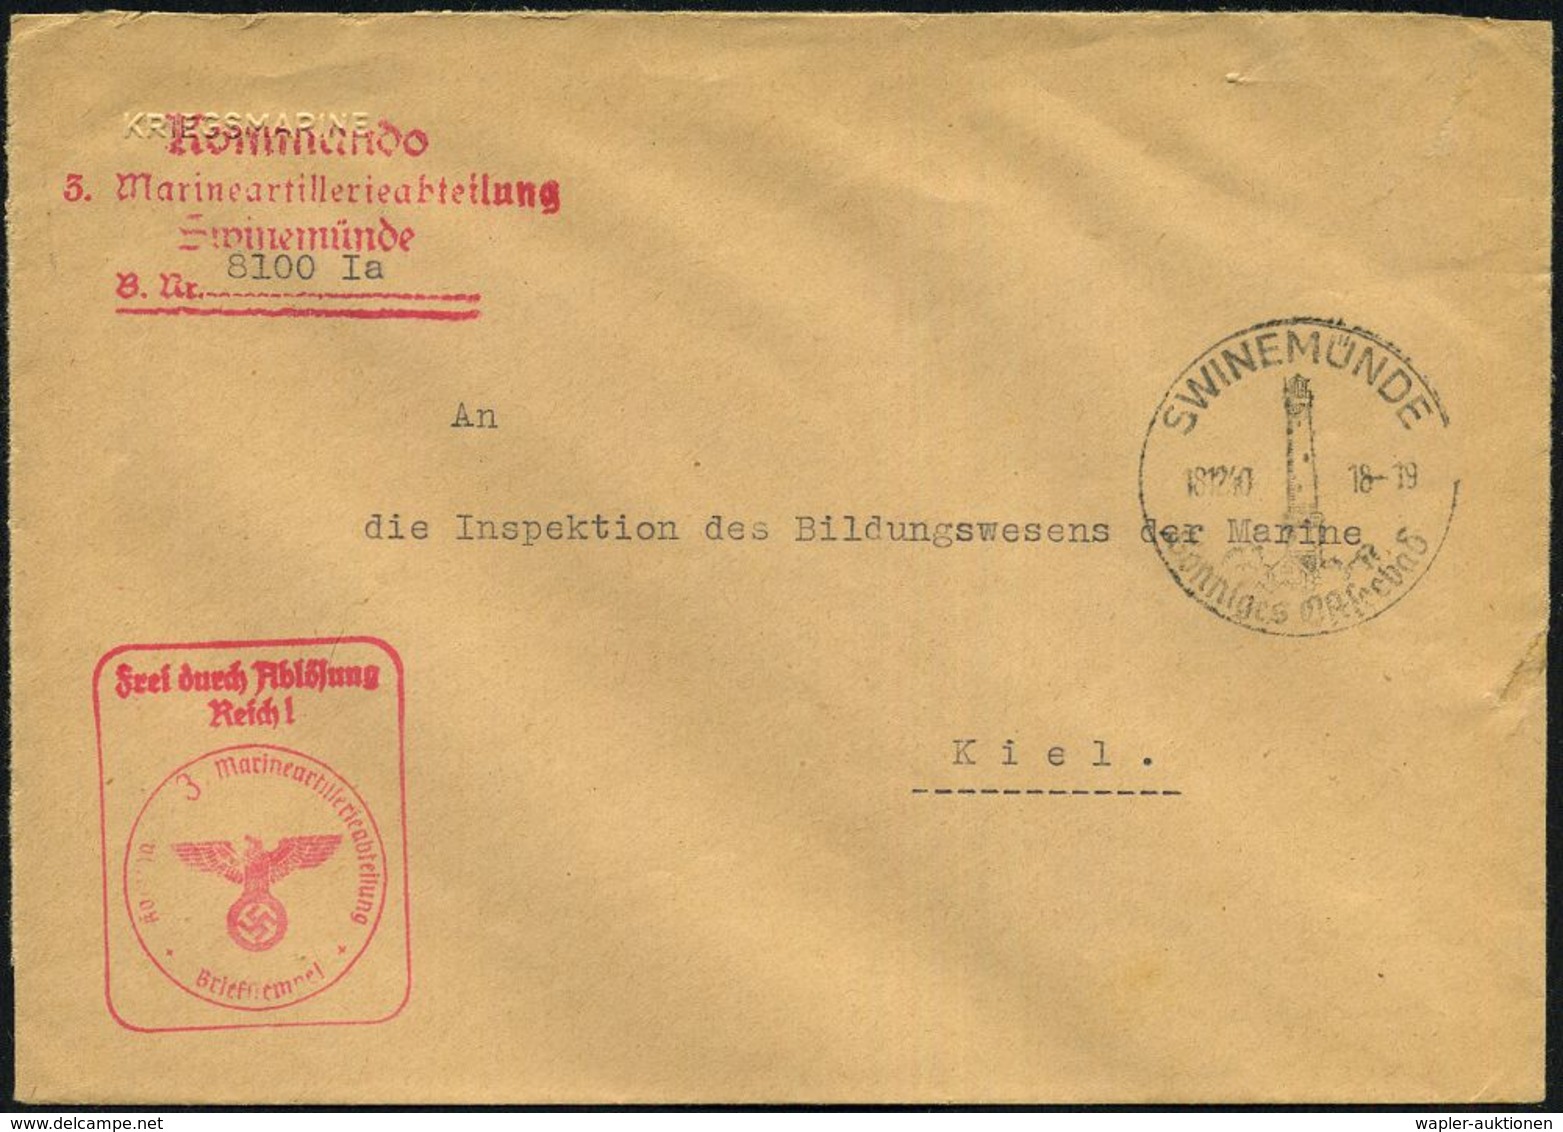 SWINEMÜNDE/ Sonniges Ostseebad 1940 (18.12.) HWSt = Leuchtturm + 2 Verschiedene Rote HdN: FdAR!/ Kommando 3. Marineartil - Fari